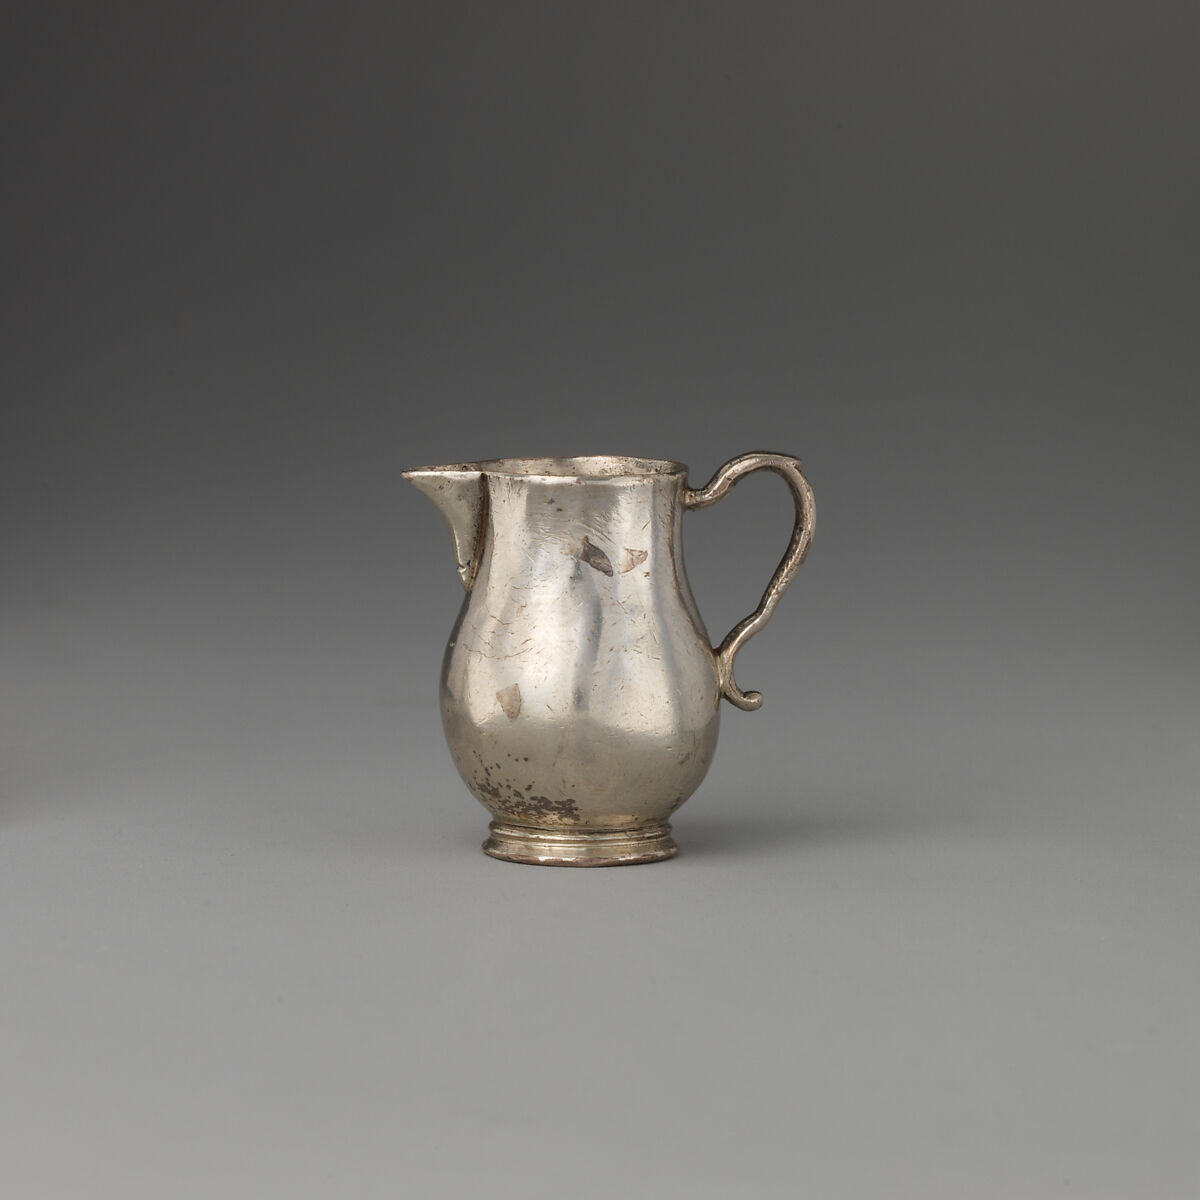 Miniature cream jug (part of a set), David Clayton (British, active 1689), Silver, British, London 